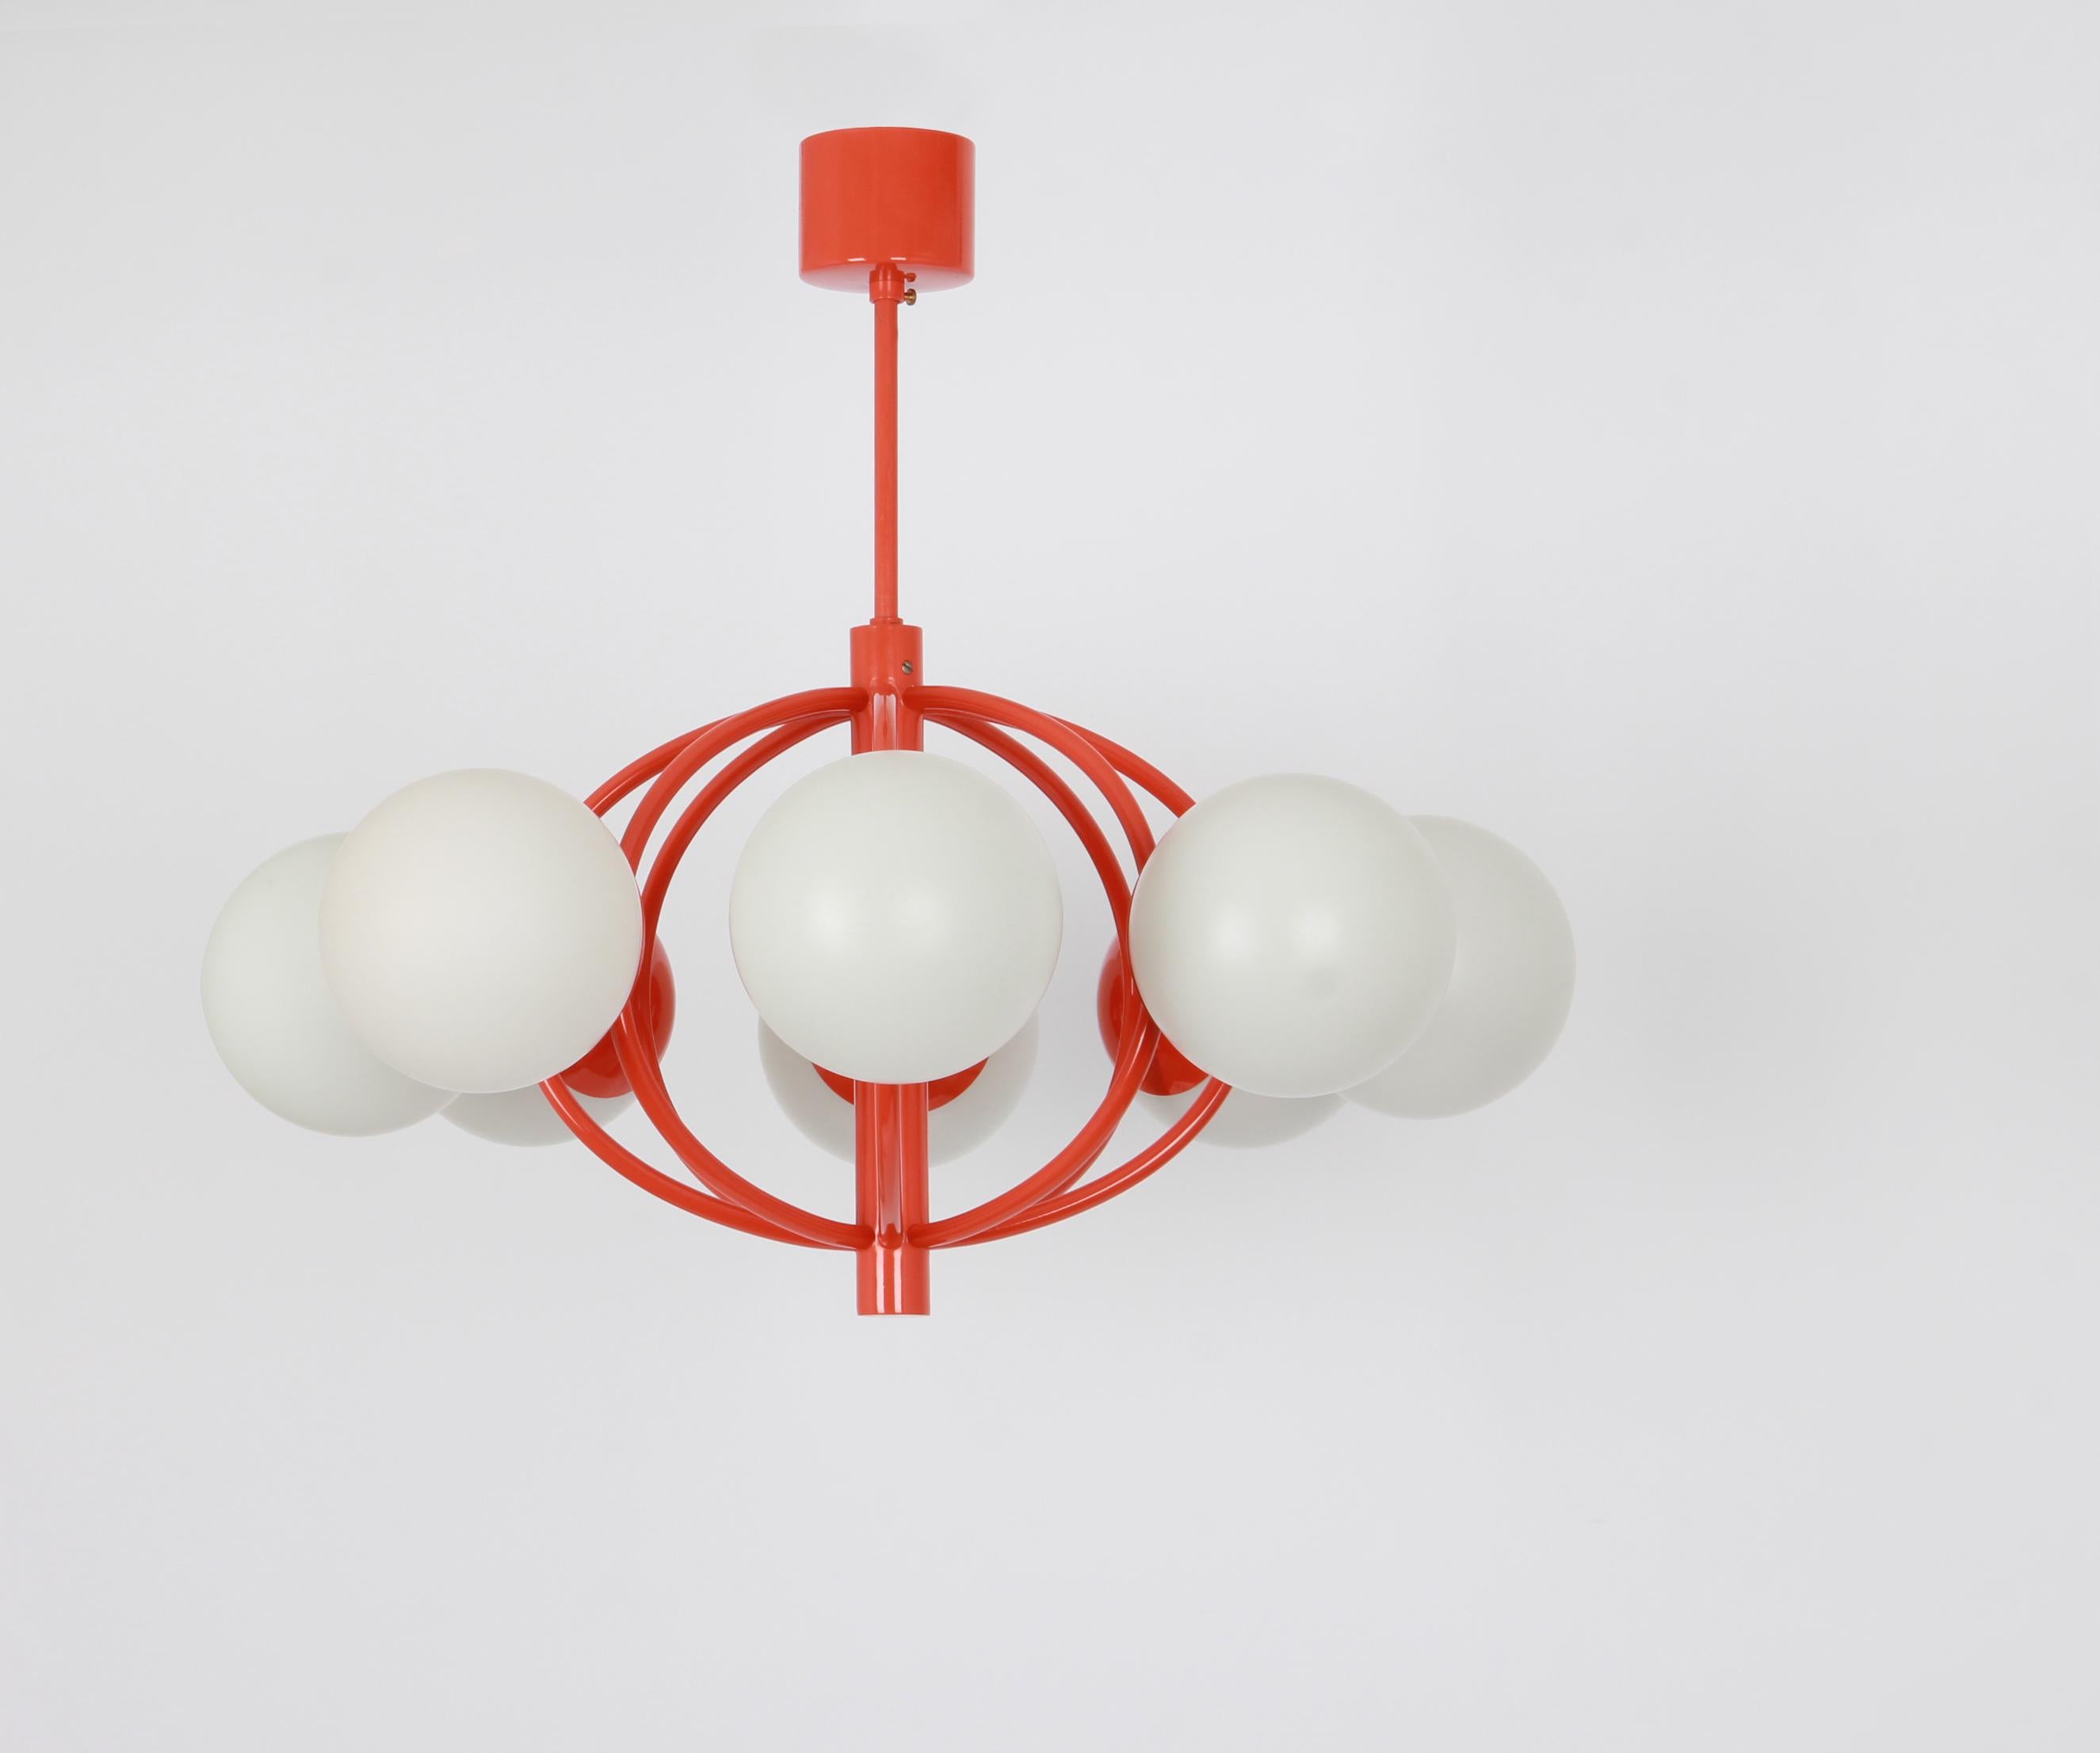 Midcentury Orbital Ceiling Lamp Pendant in Orange by Kaiser, Germany, 1960s For Sale 3